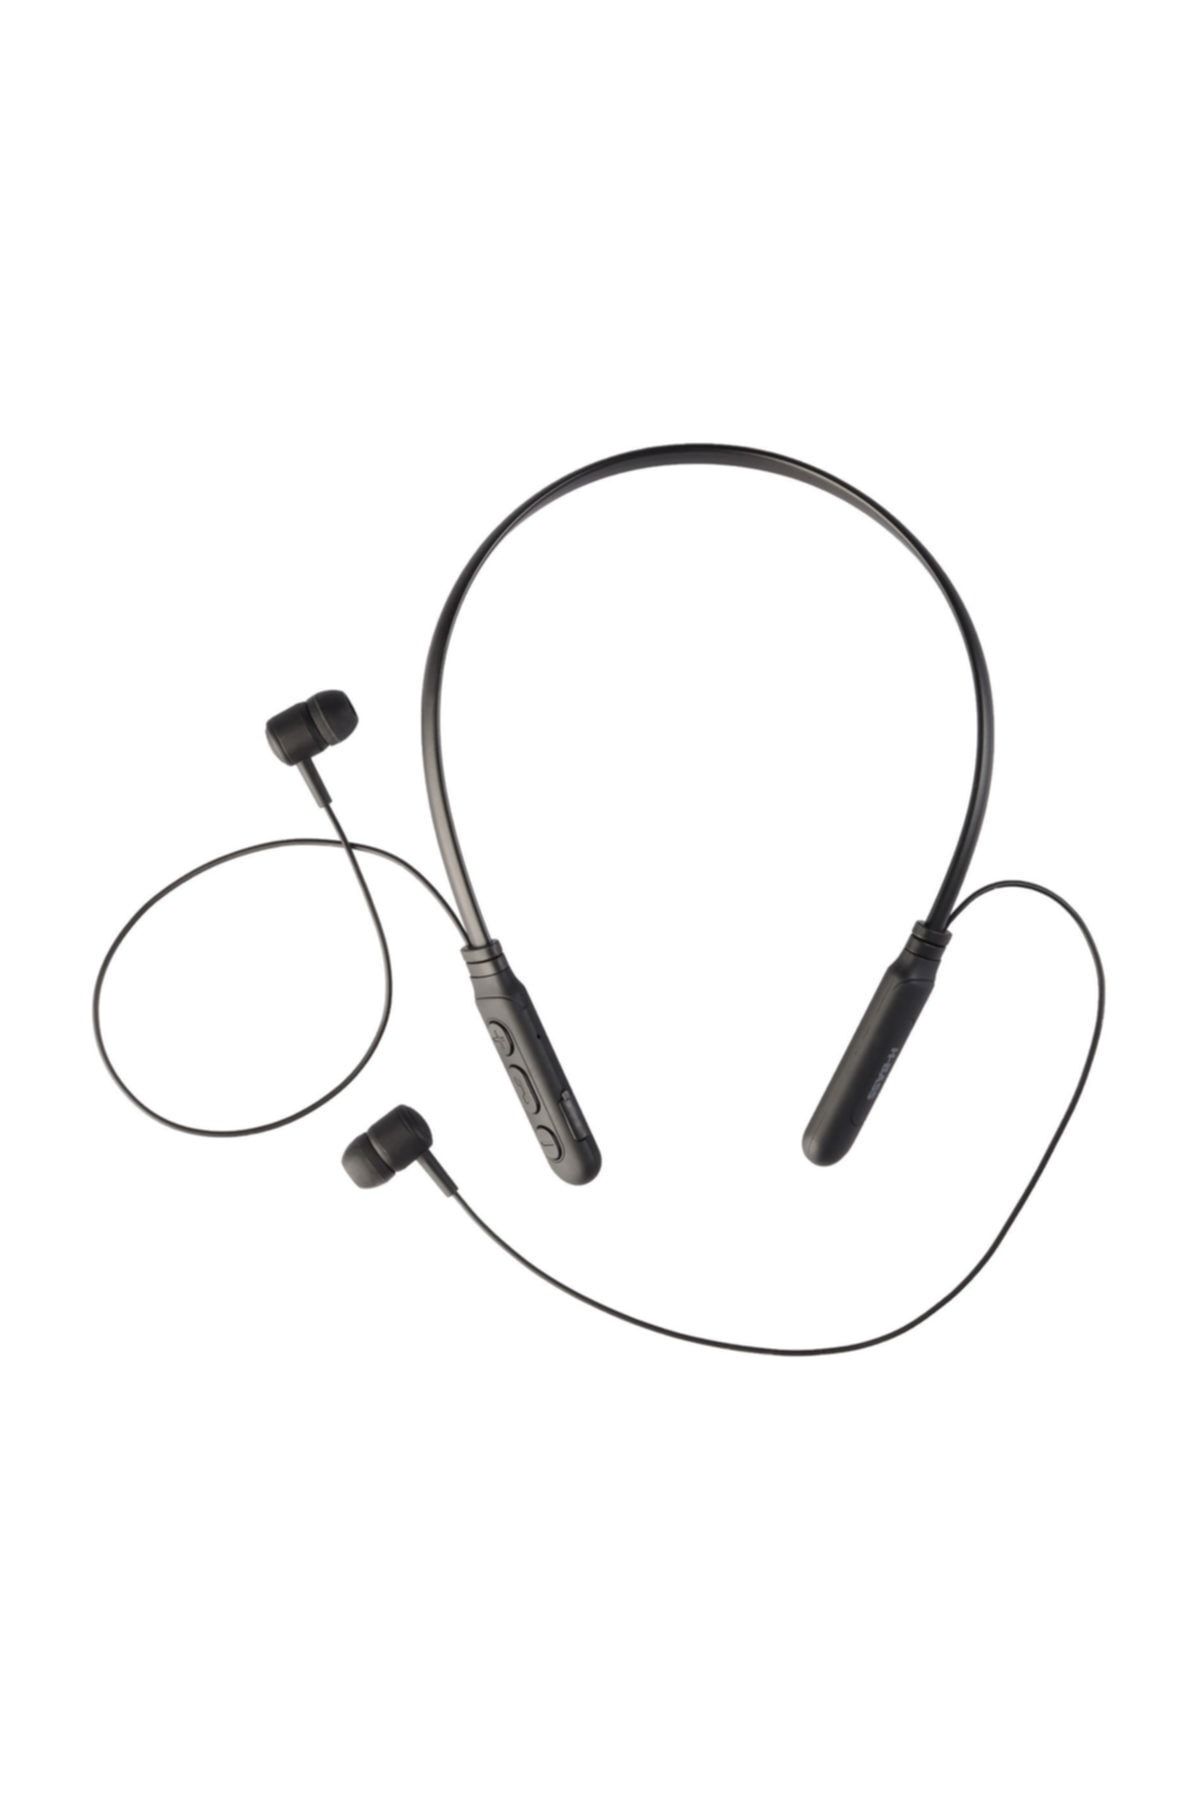 MF PRODUCT 0179 Kablosuz Kulak Içi Bluetooth Kulaklık Siyah